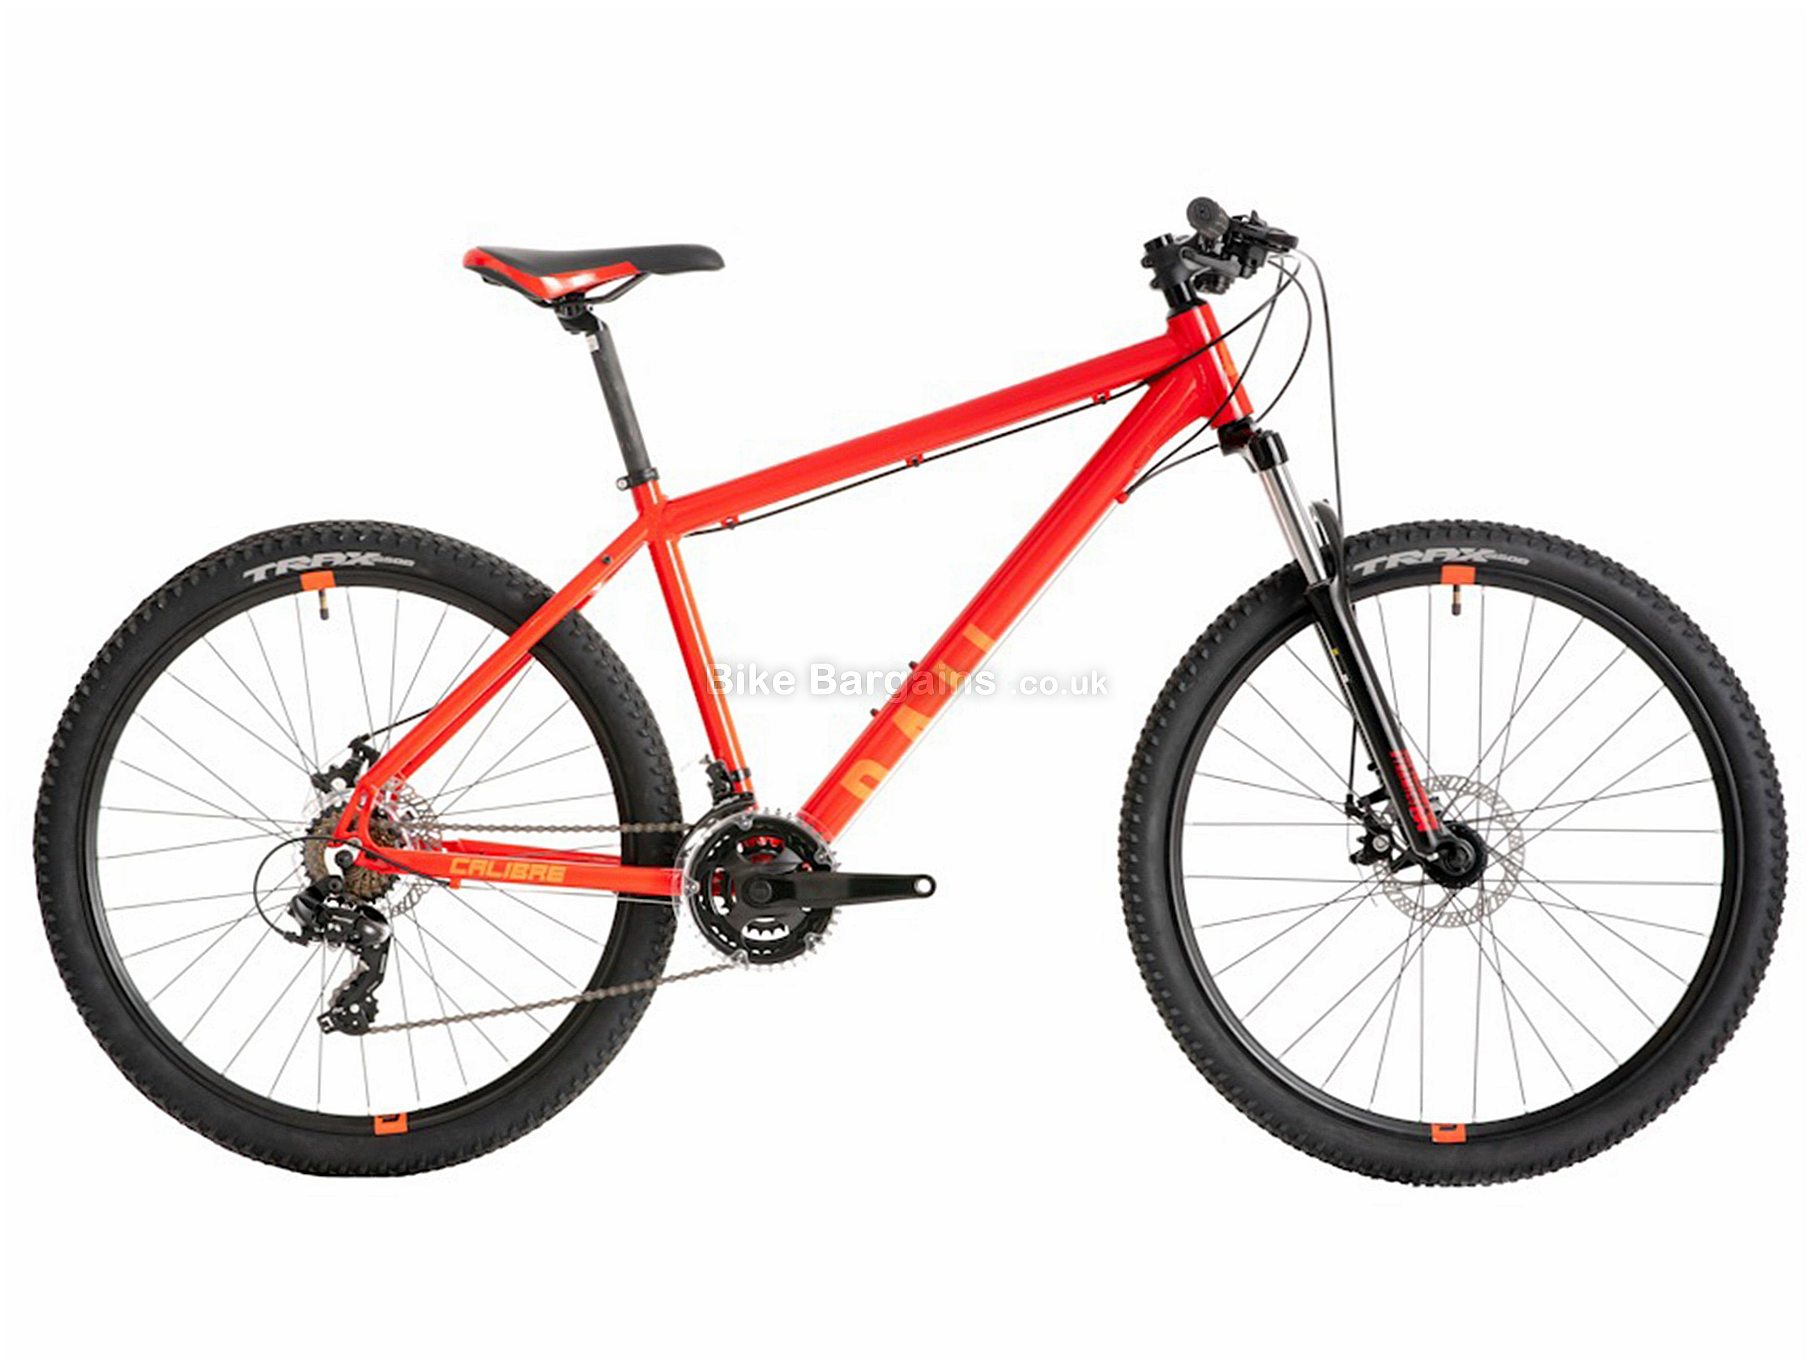 calibre rail mountain bike red